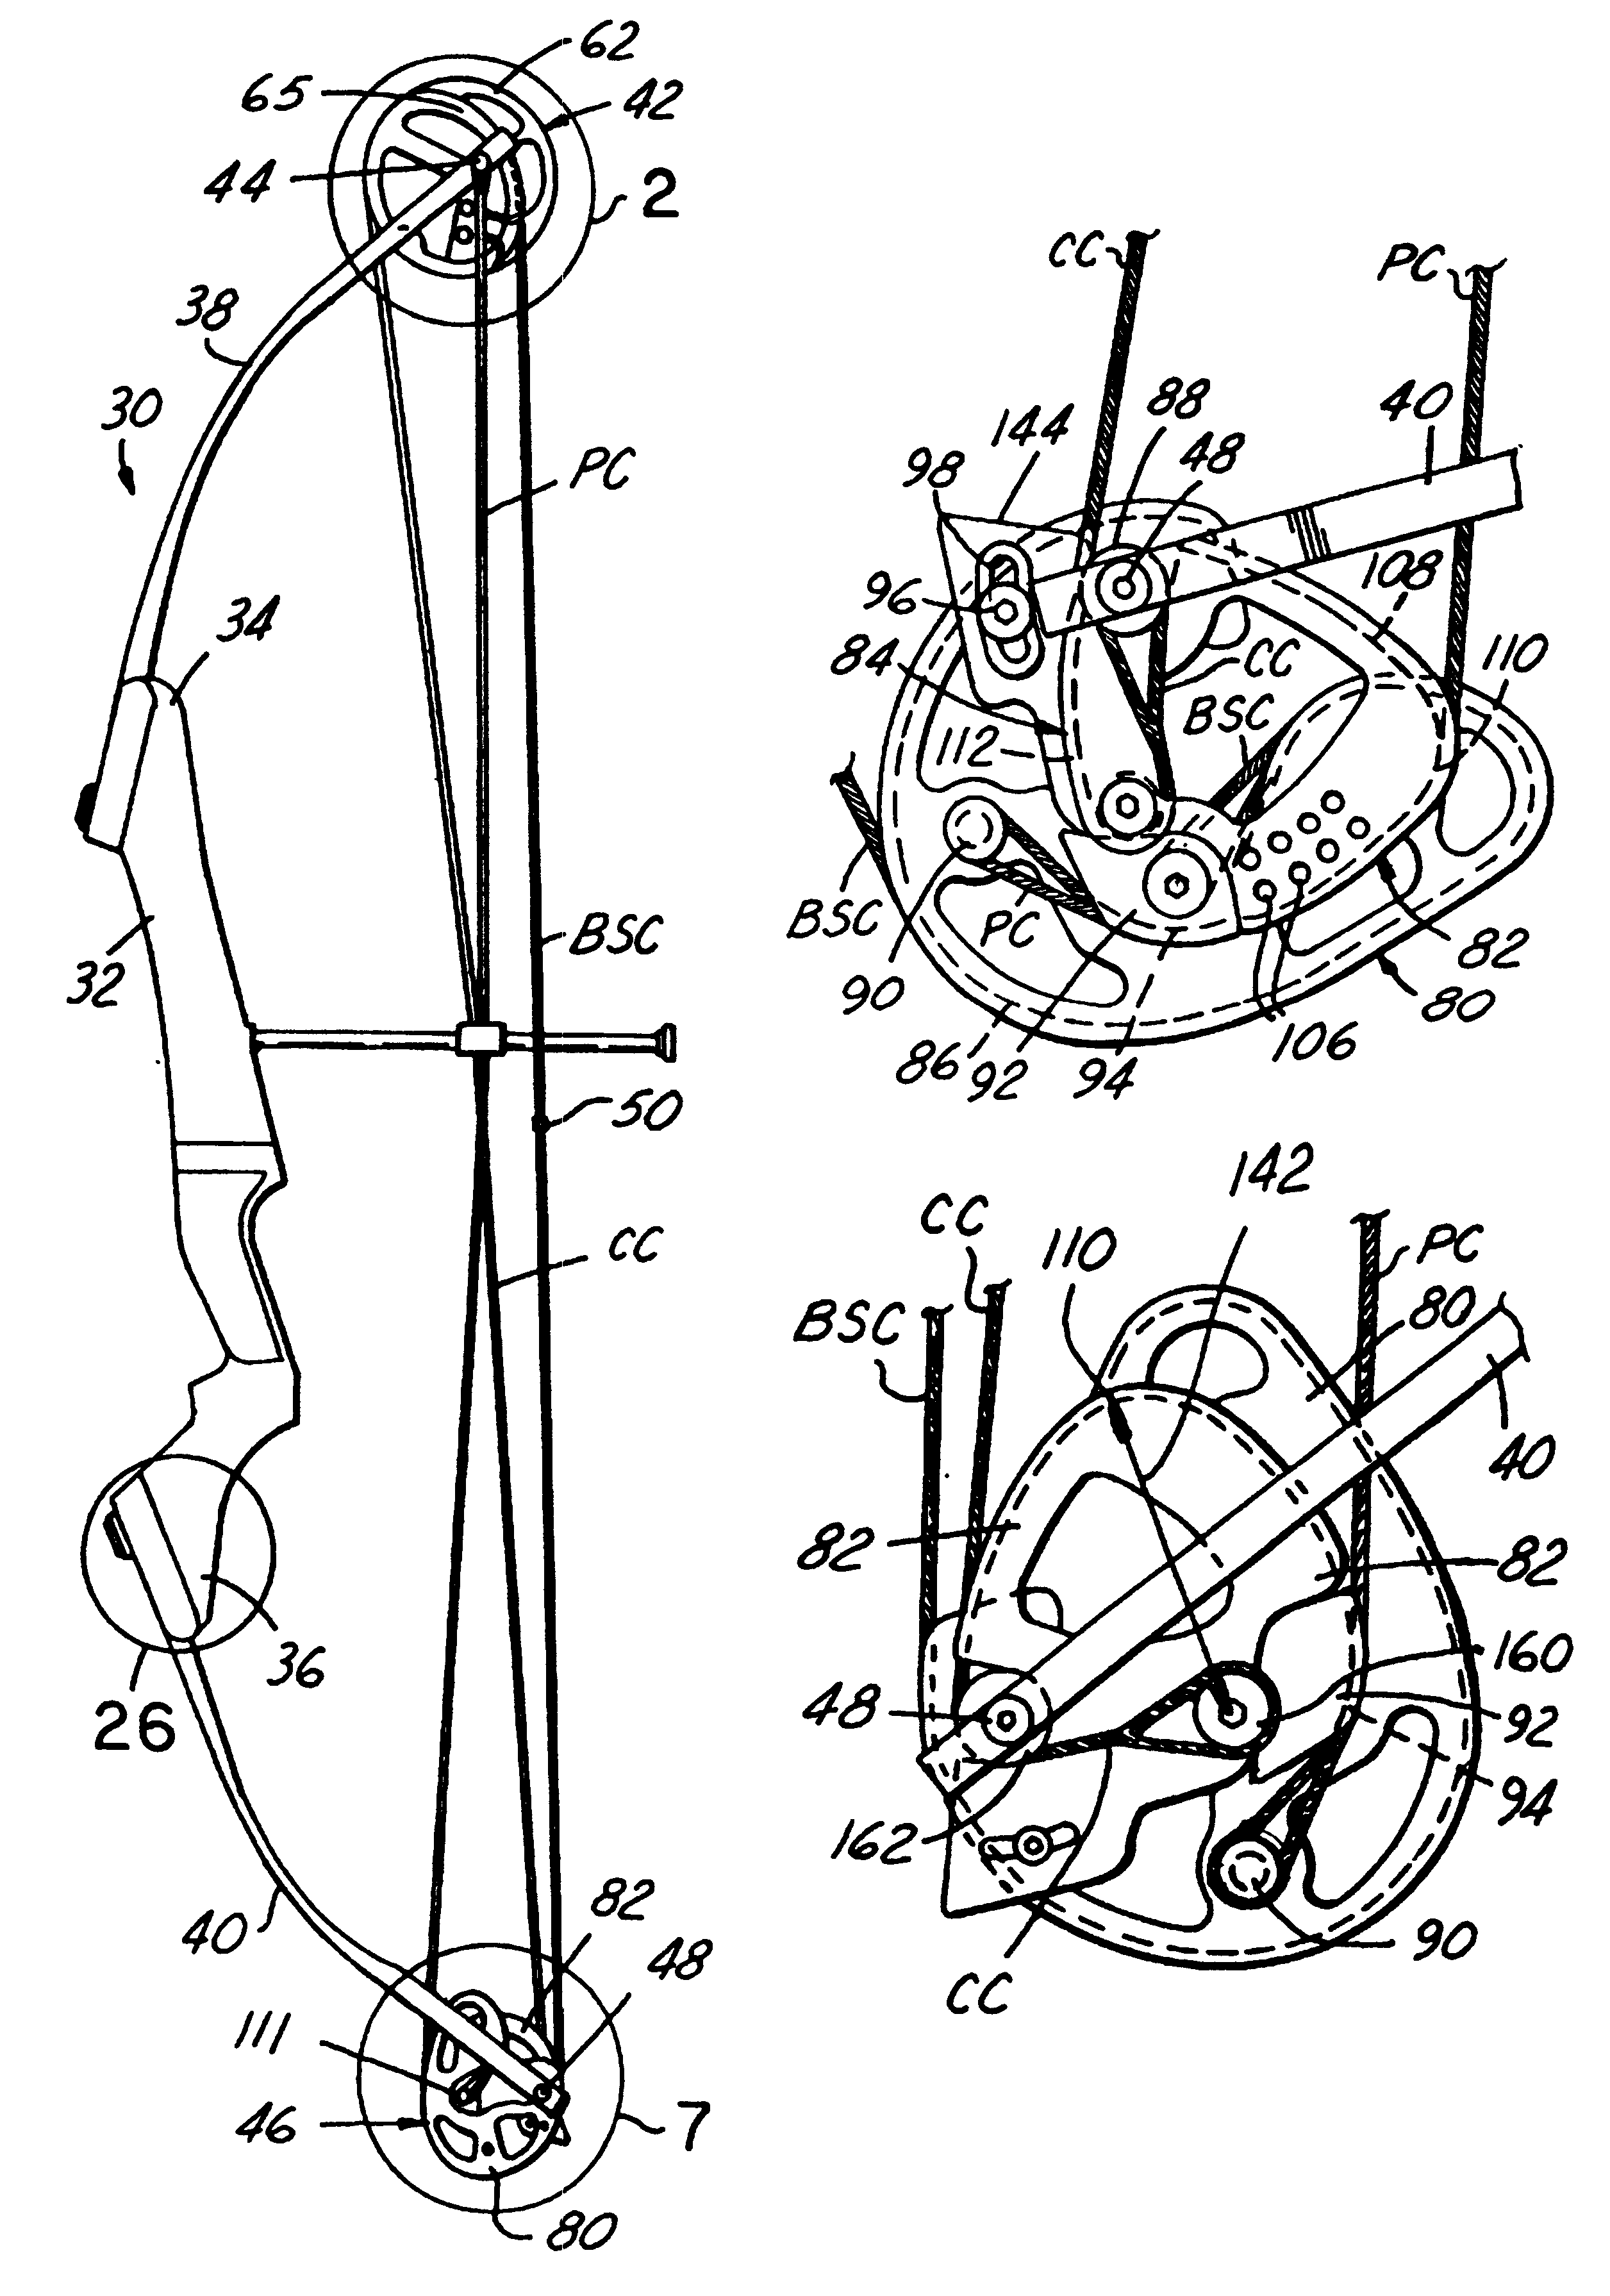 Single-cam compound archery bow